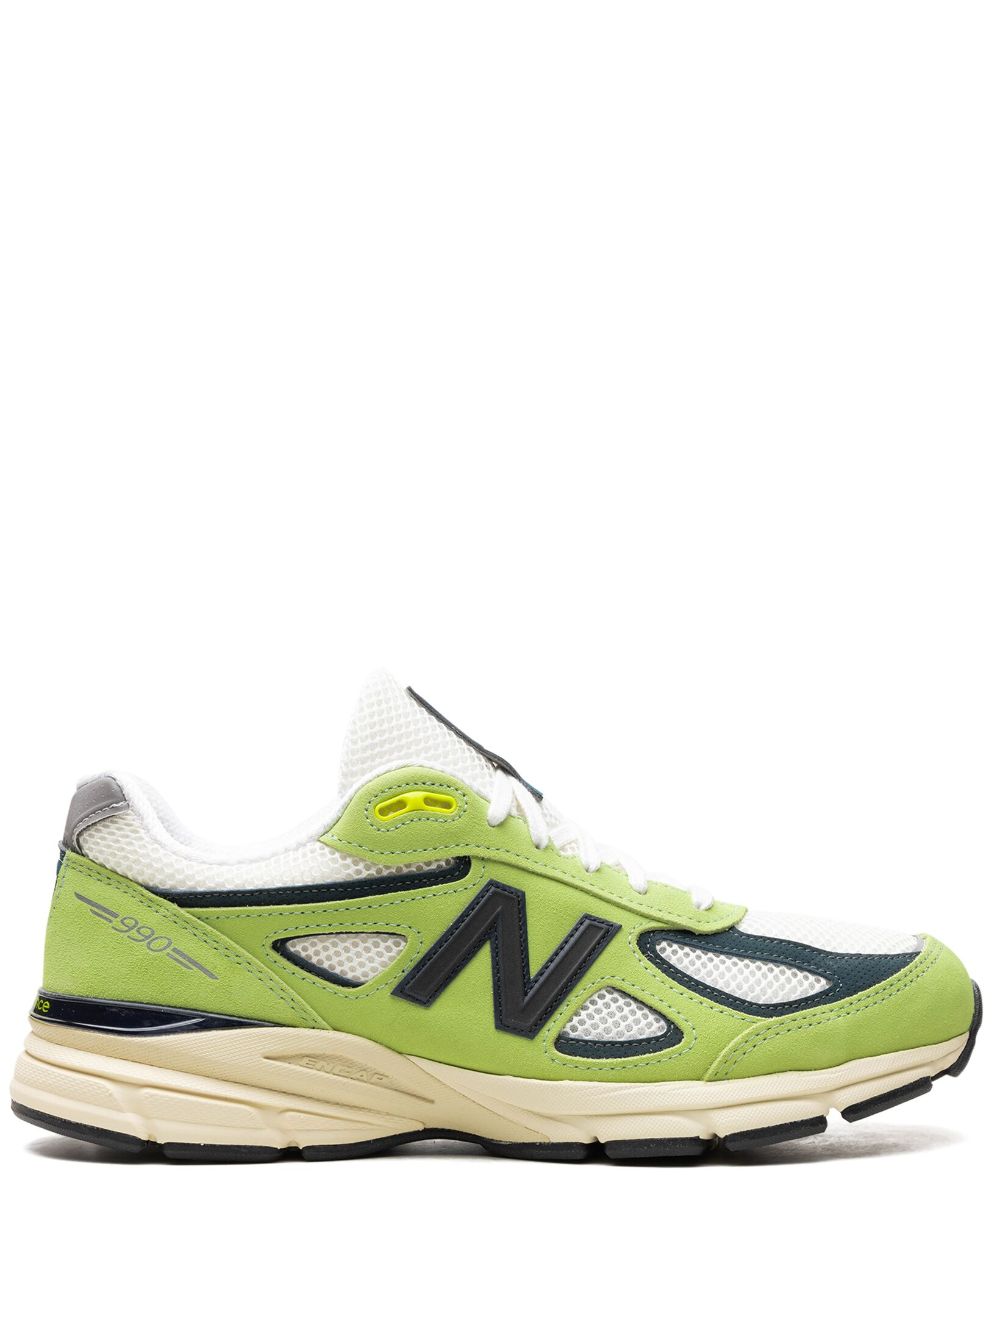 New Balance X Teddy Santis 990v4 Sneakers In Green